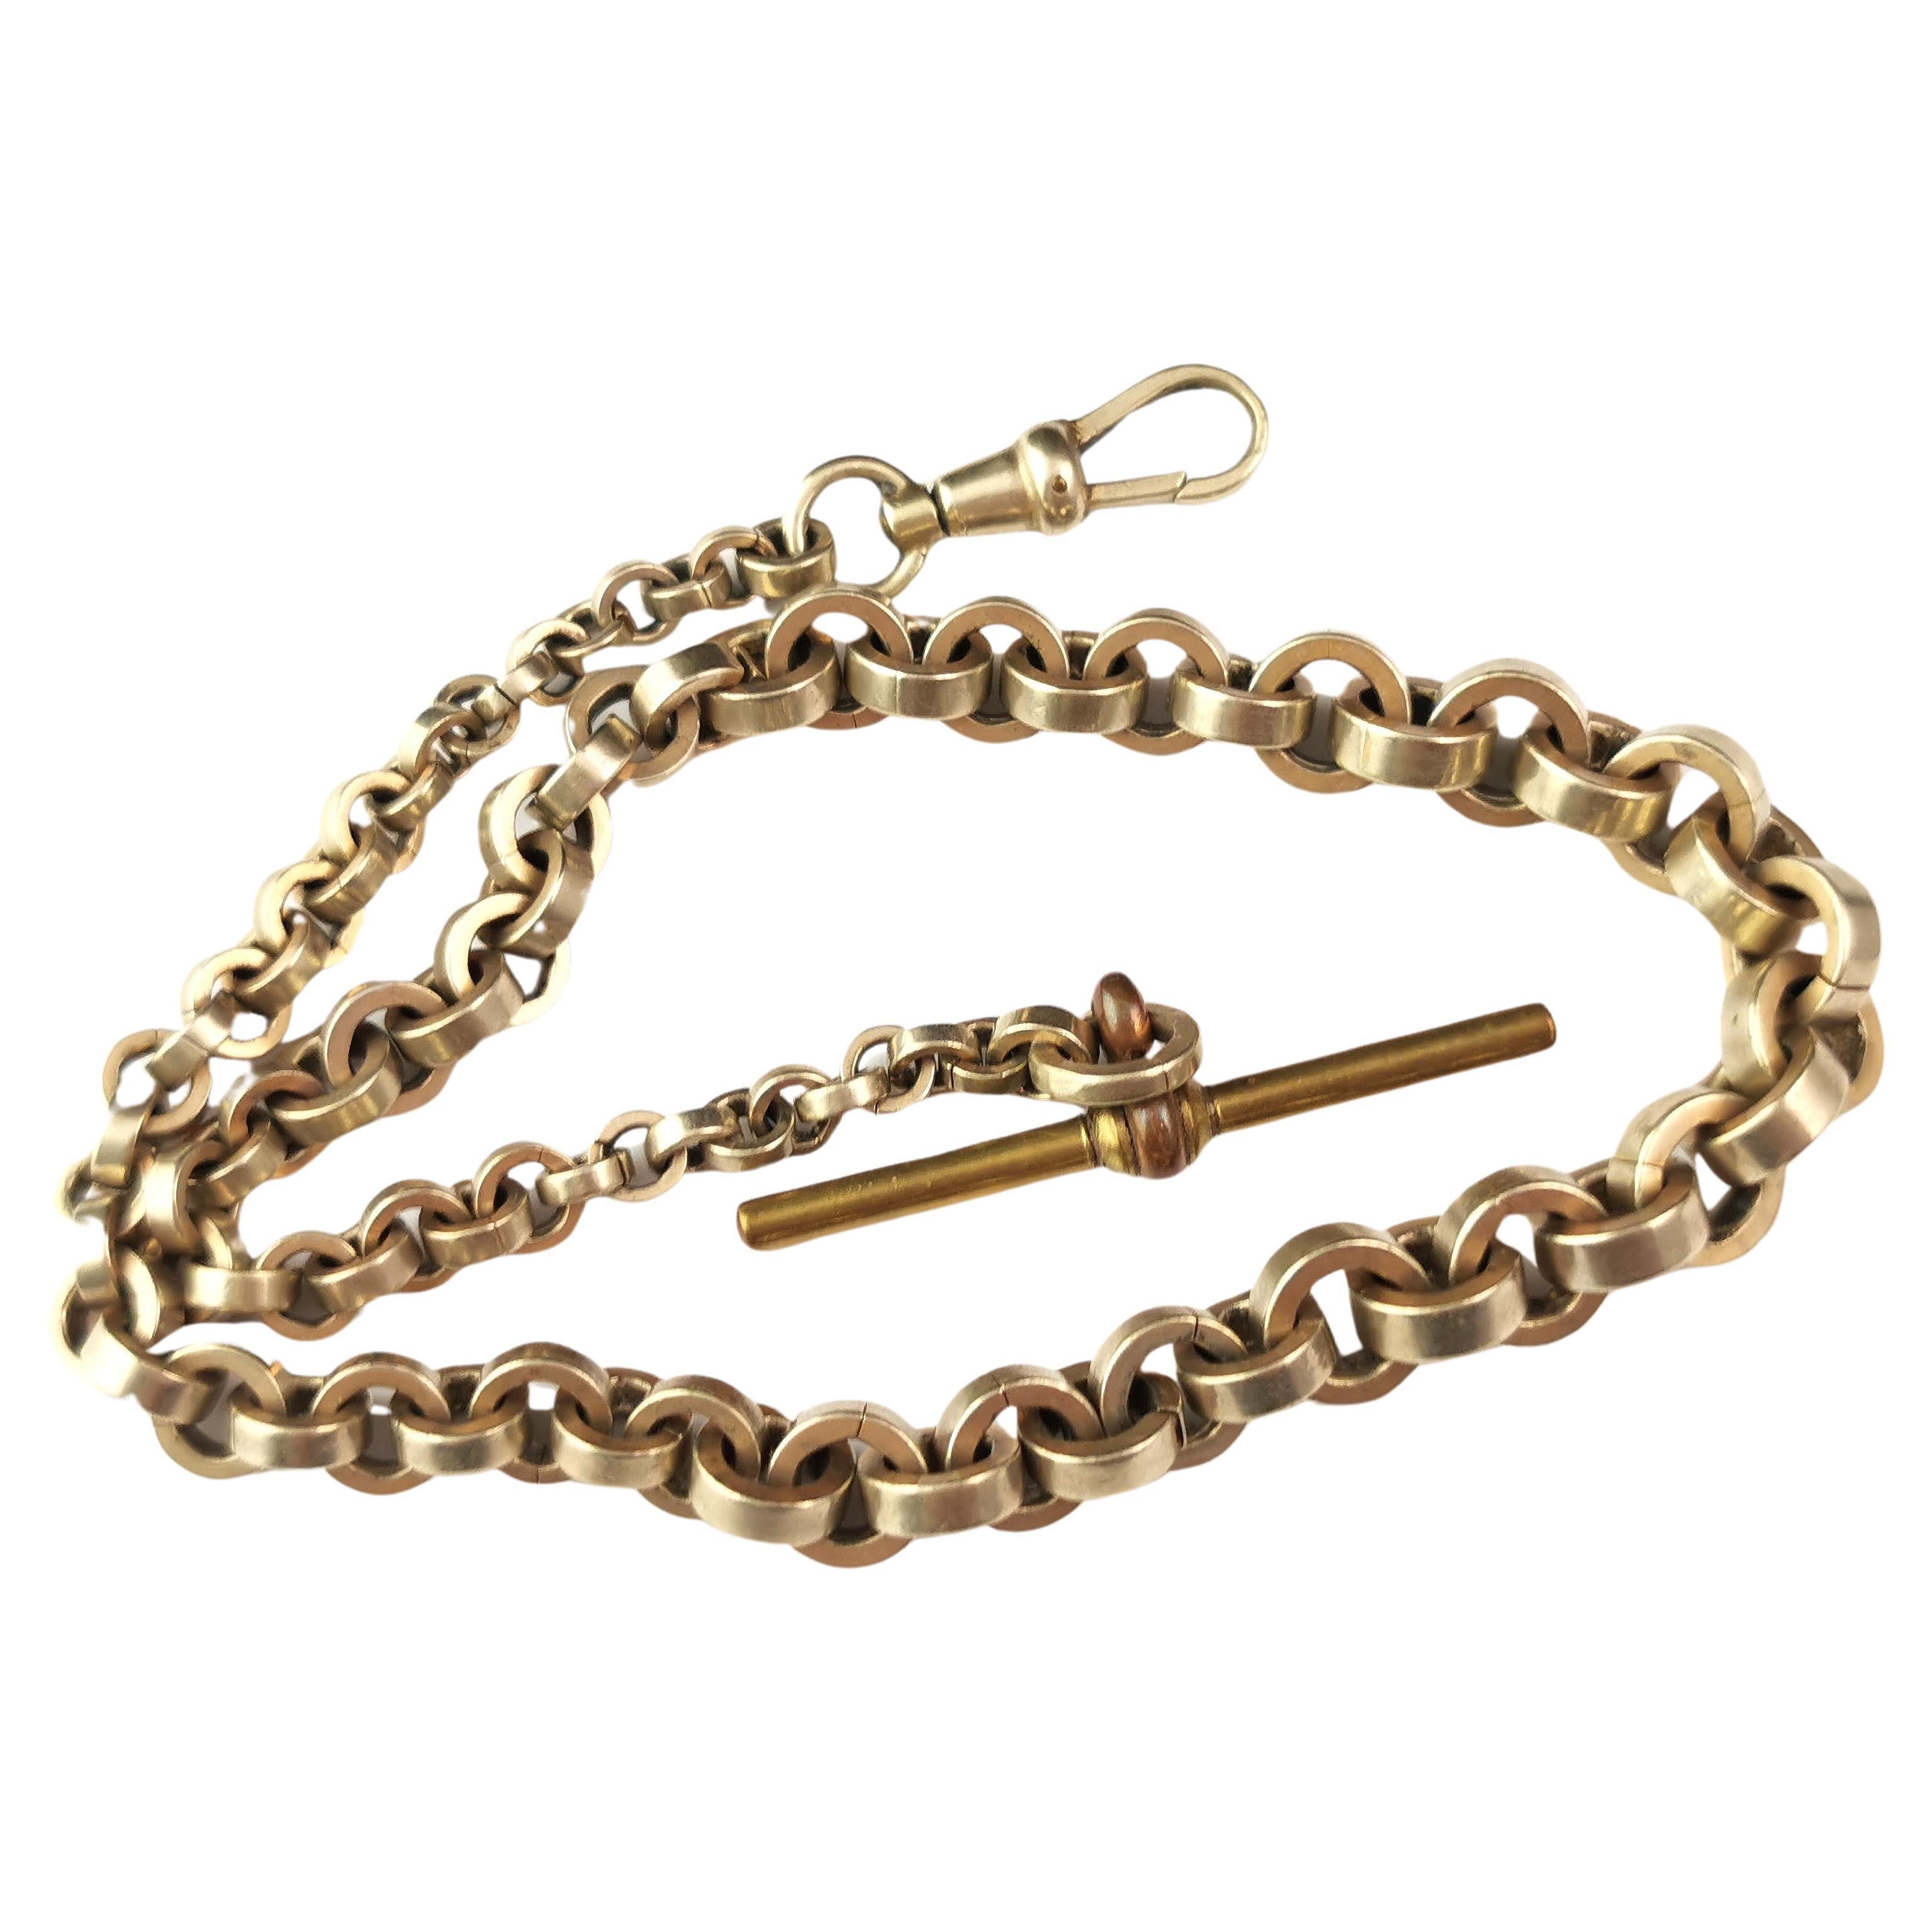 Antique gilt metal Albert chain, chunky rolo link 